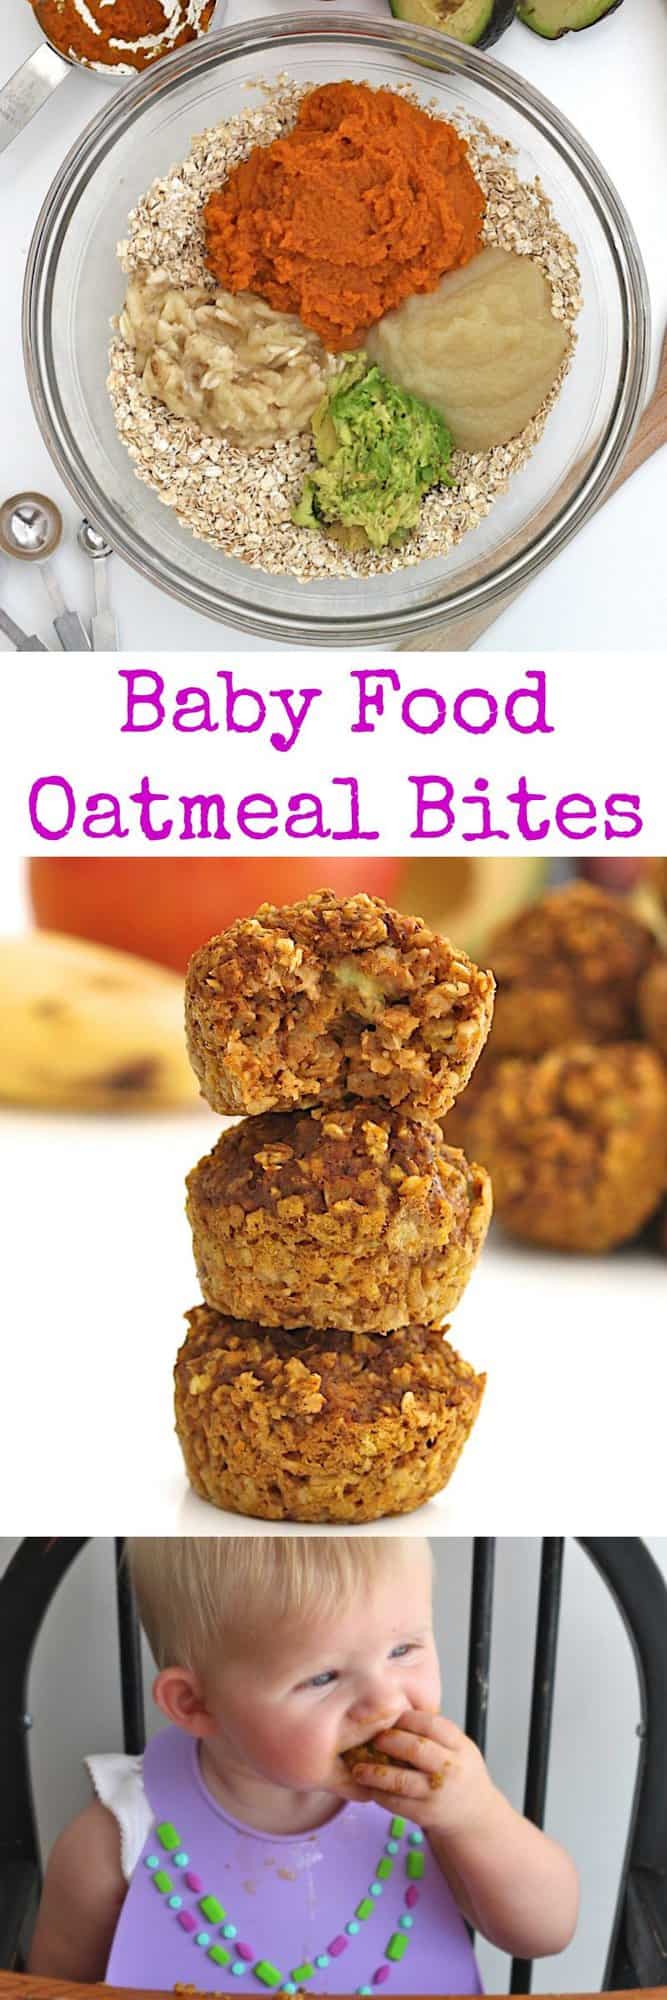 Baby Food Oatmeal Bites